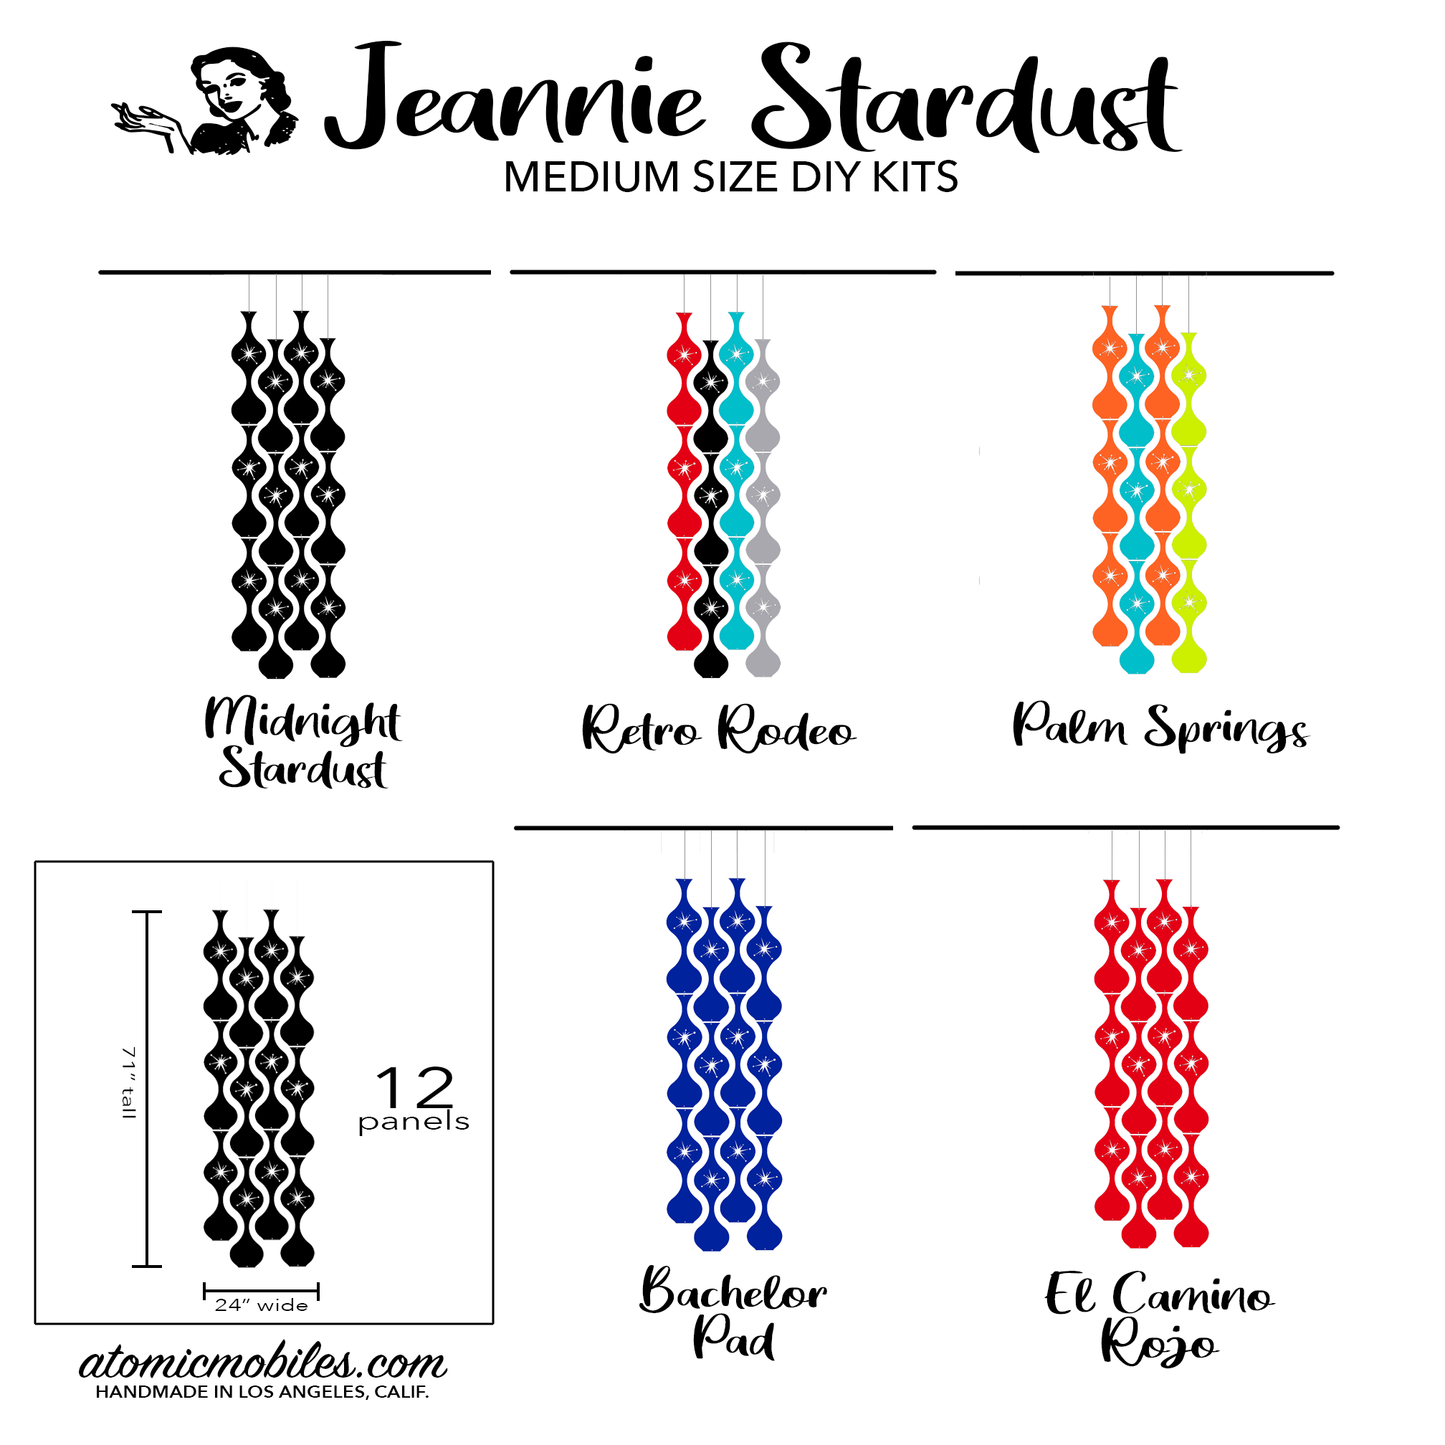 Jeannie Stardust Mid Century Modern retro room divider panels DIY Kit Medium Size - by AtomicMobiles.com